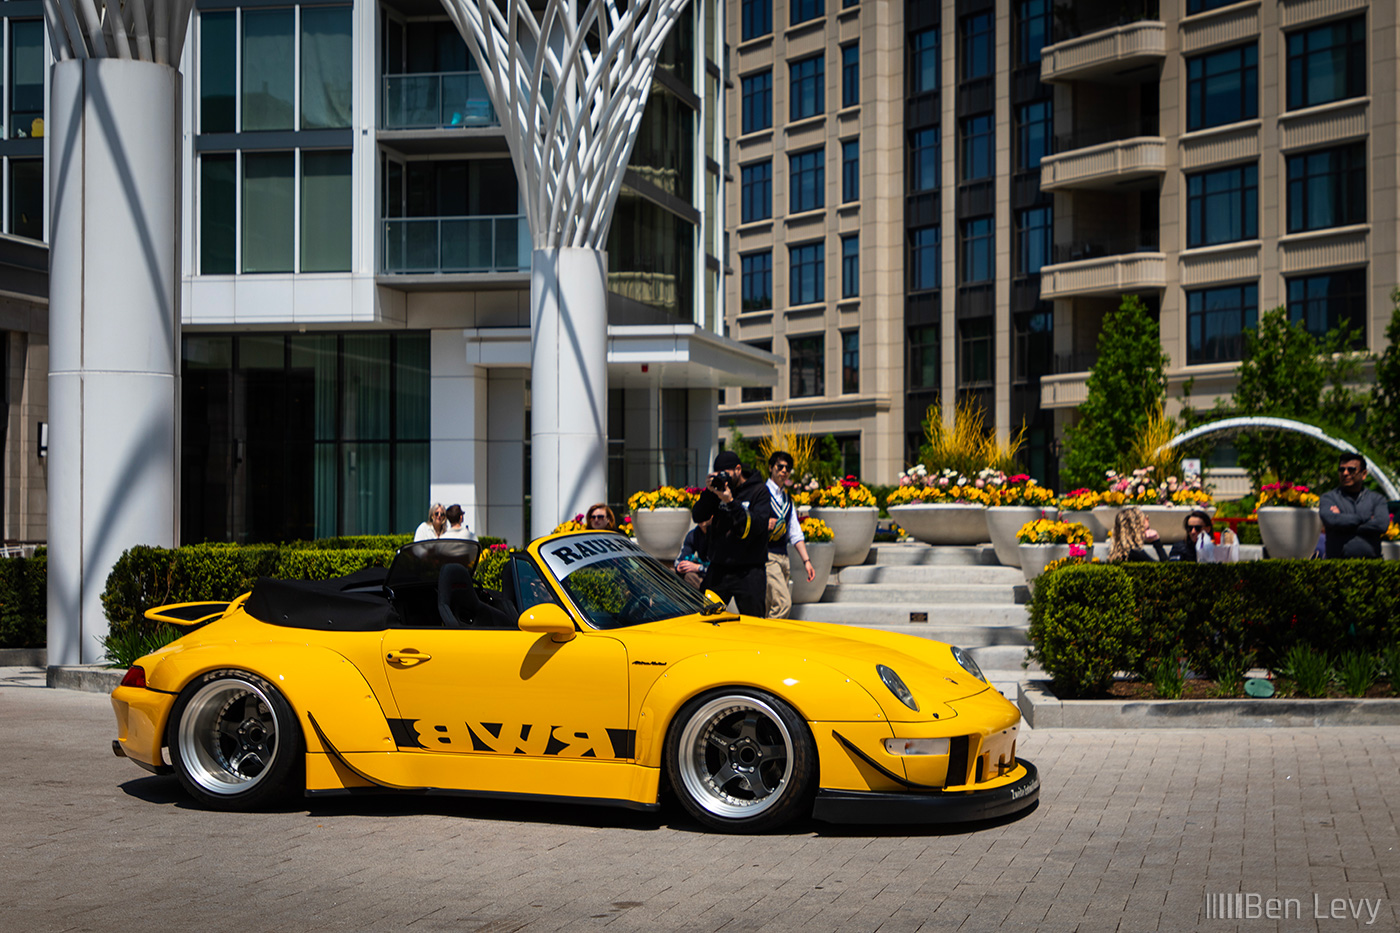 Yellow RWB Porsche 911 Convertible at Lincoln Common in Chicago